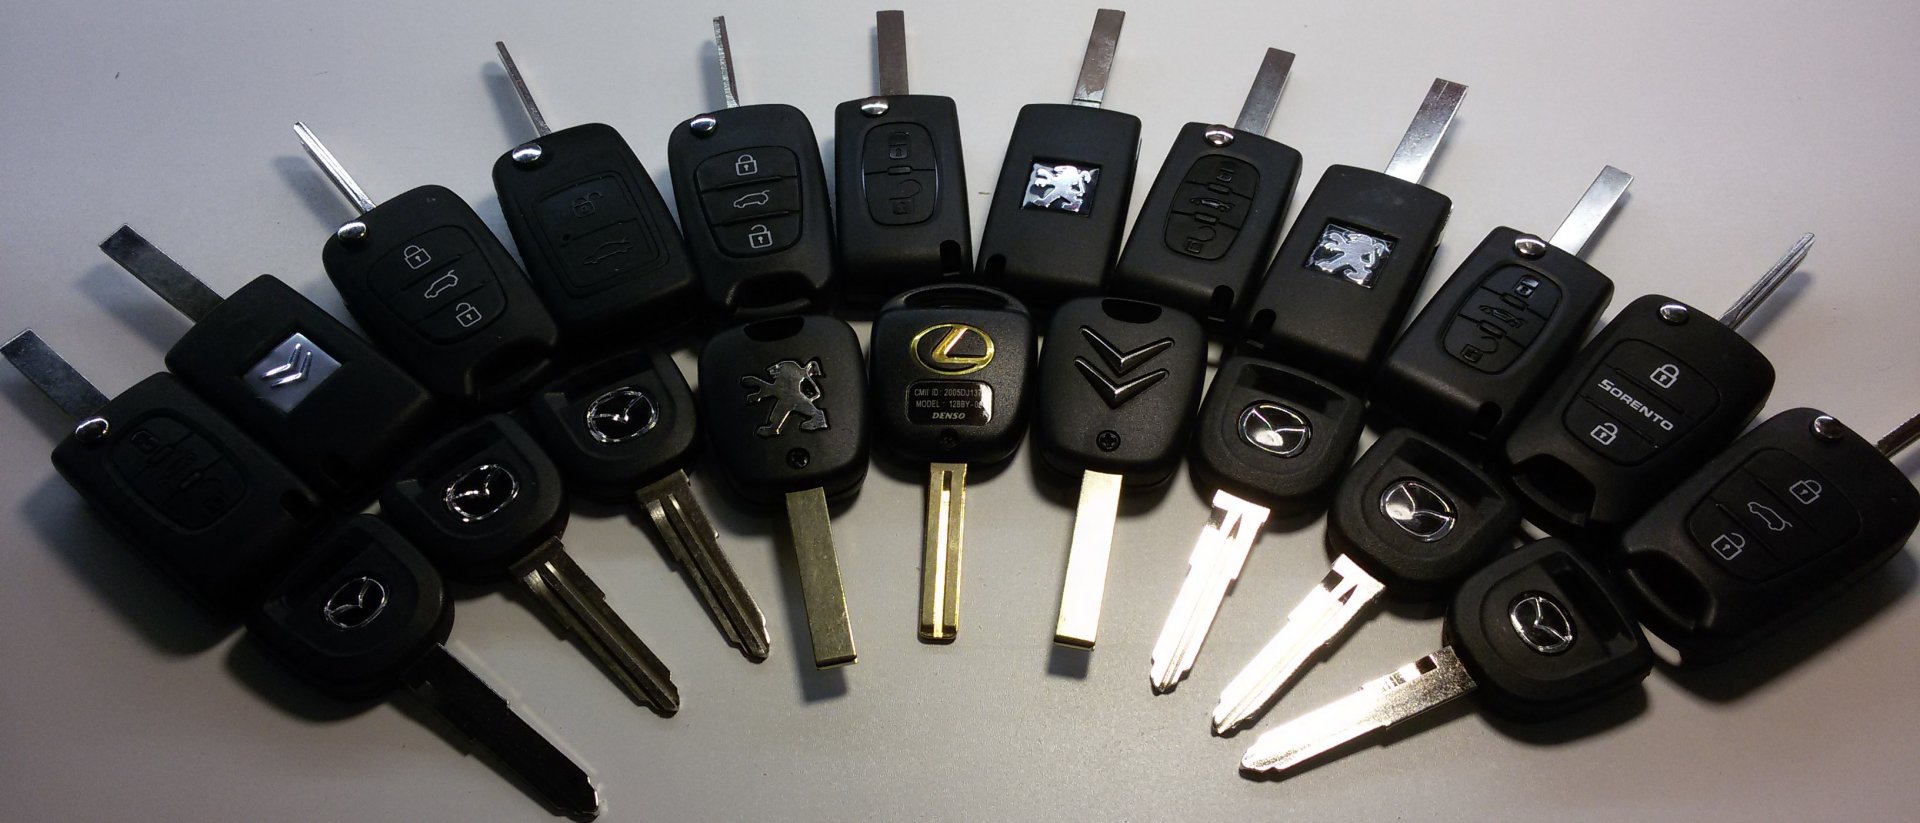 Изготовления автомобильных чипов. Ключ автомобильный. Ключи от автомобиля. Чип ключ для автомобиля. Автомобильные ключи с сигнализацией.